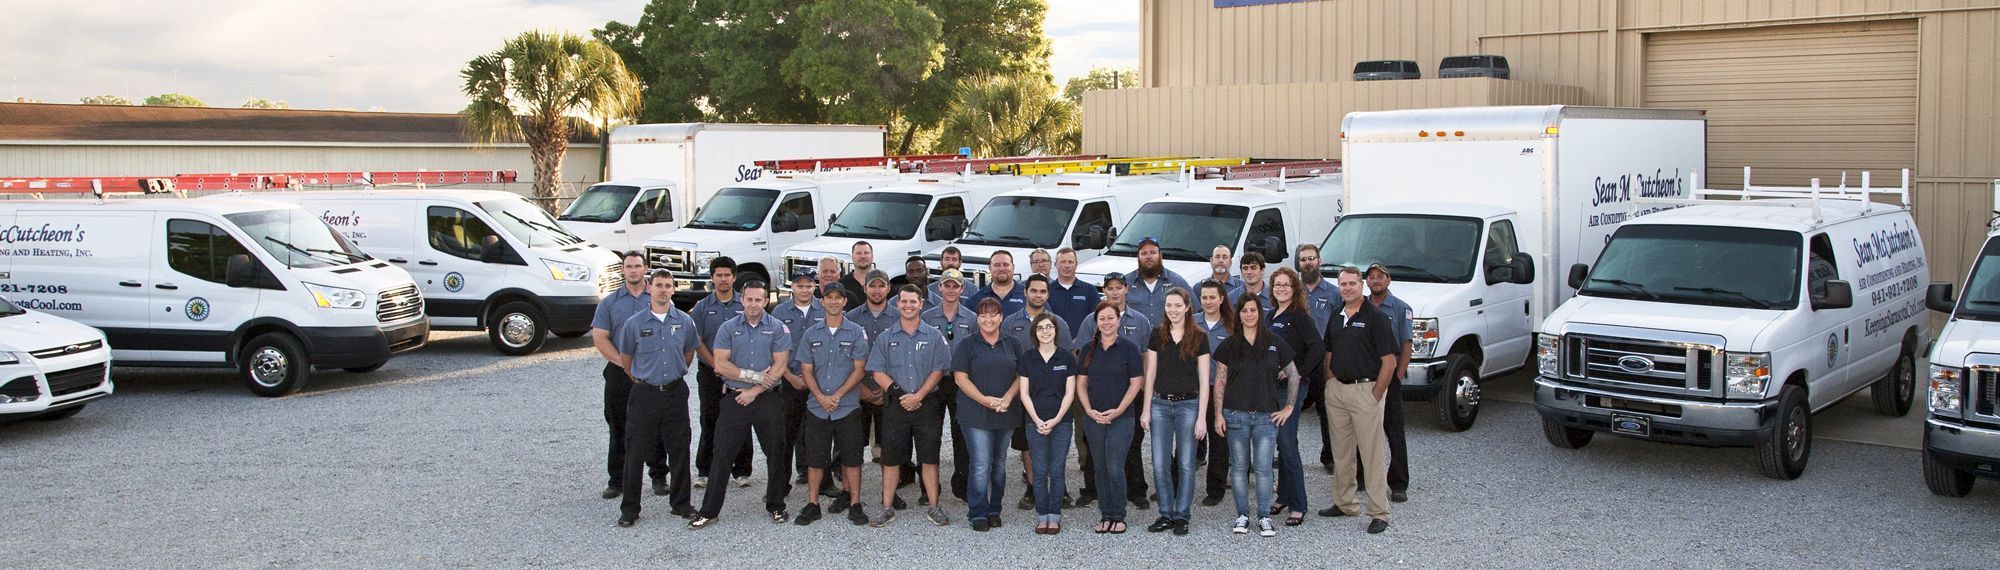 SMAC - Sarasota Air Conditioning Compnay - Team members and trucks